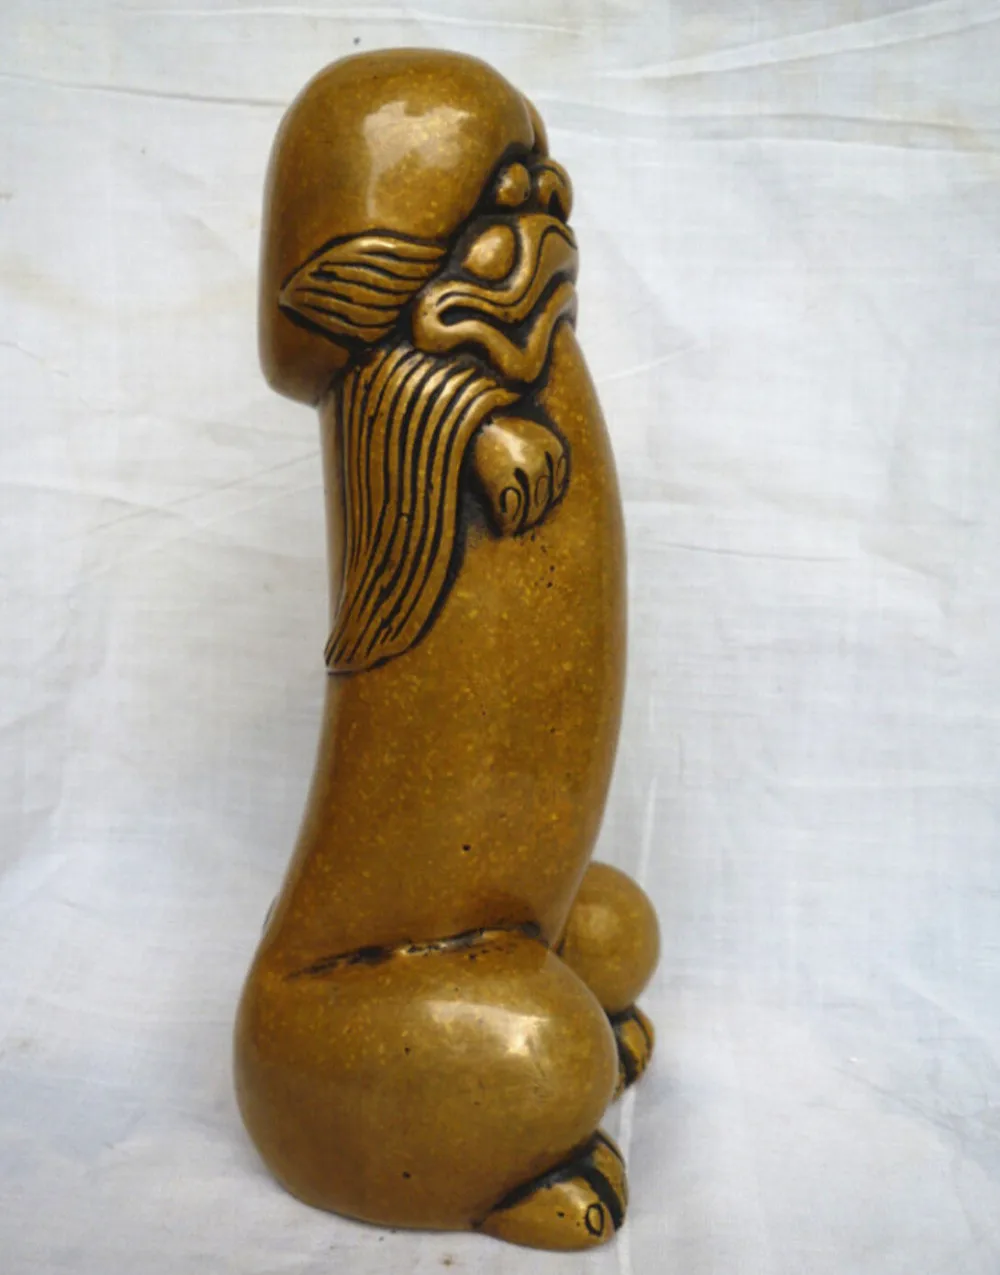 Palamide chino antiguo bronce tallado pene Dios recoger estatua figura ornamento envío gratis.